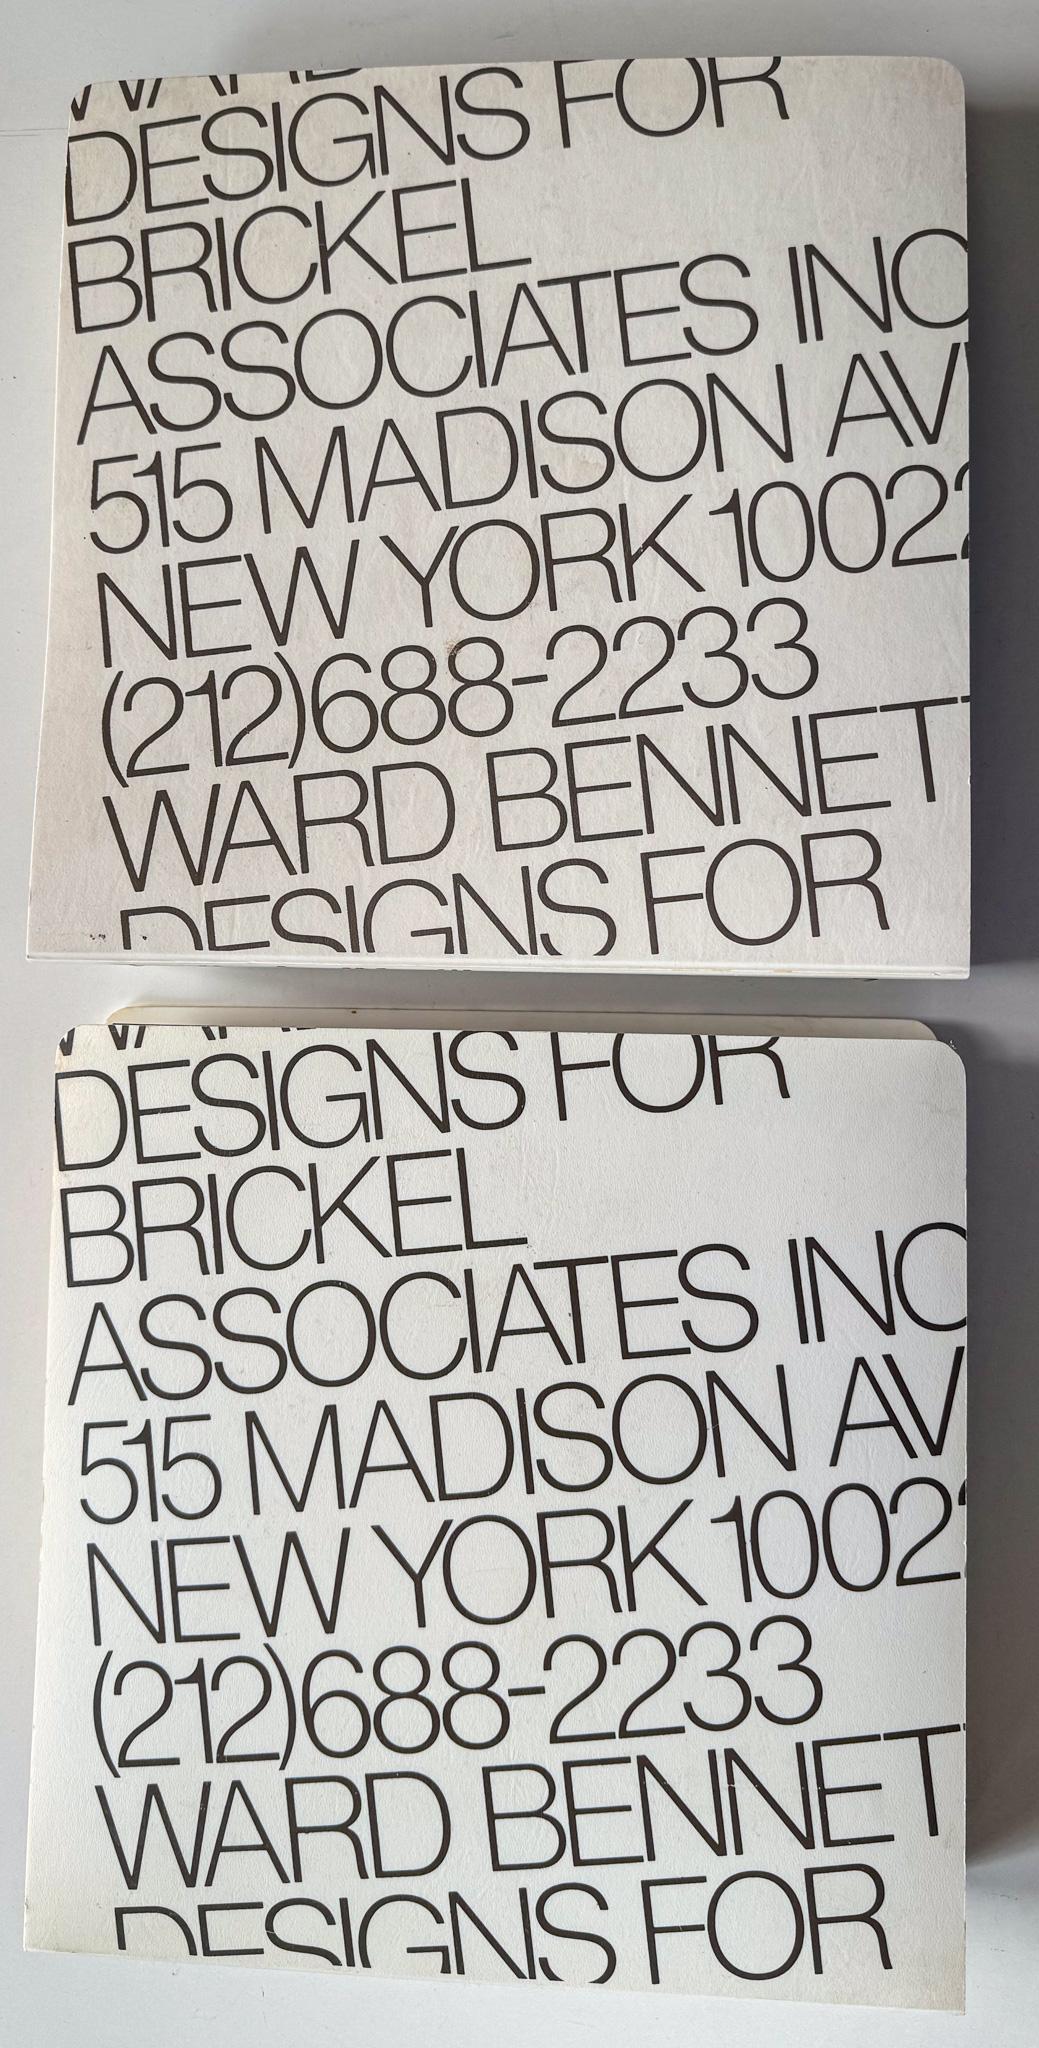 American Ward Bennett Designs for Brickel Associates (2 Volumes) For Sale